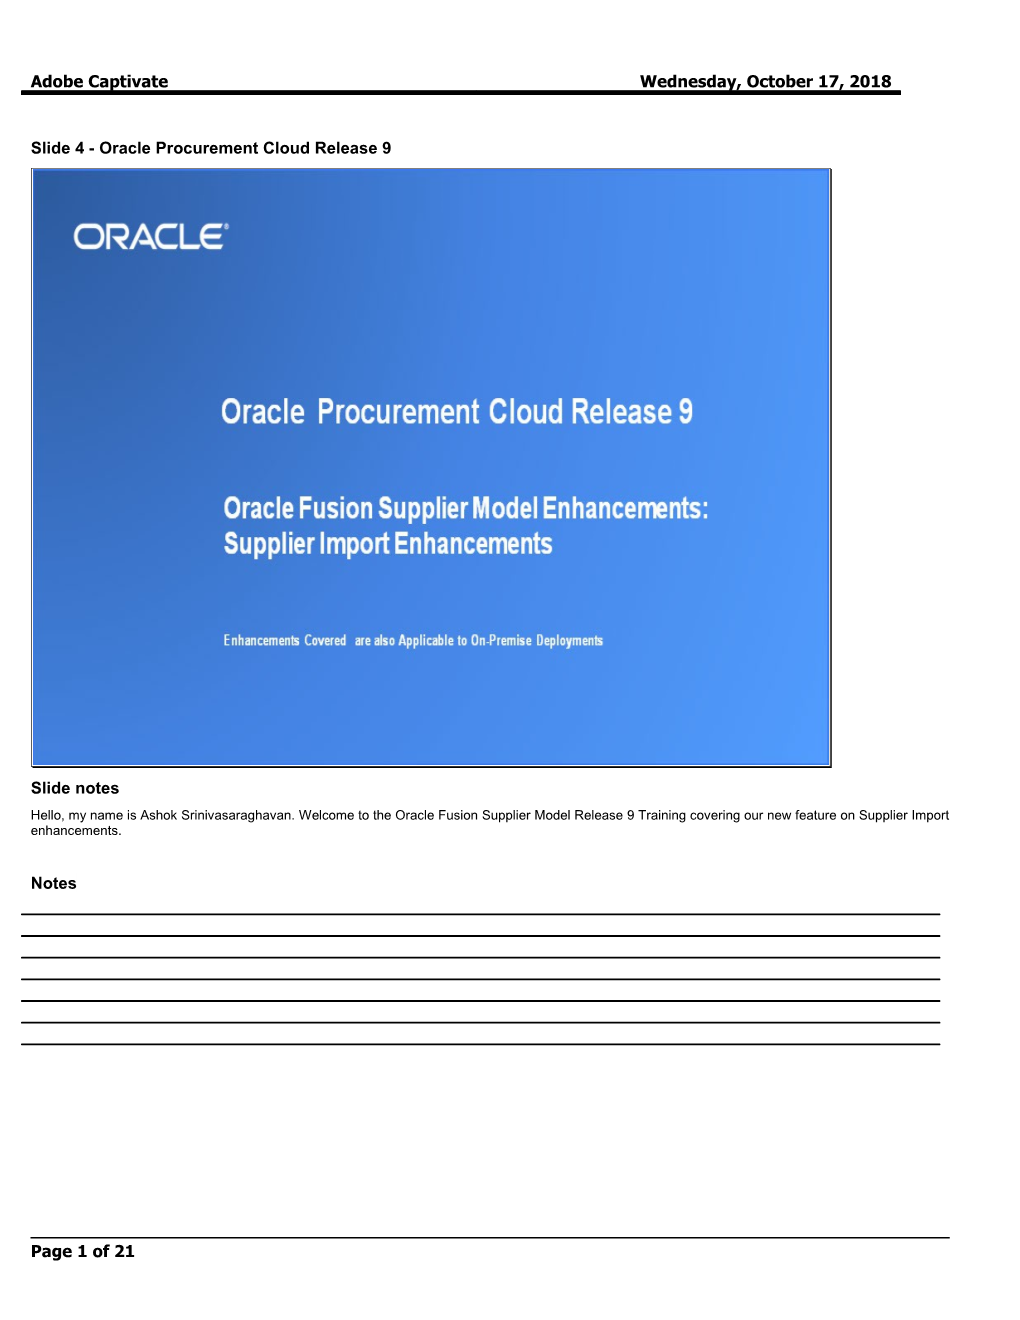 Slide 4 - Oracle Procurement Cloud Release 9